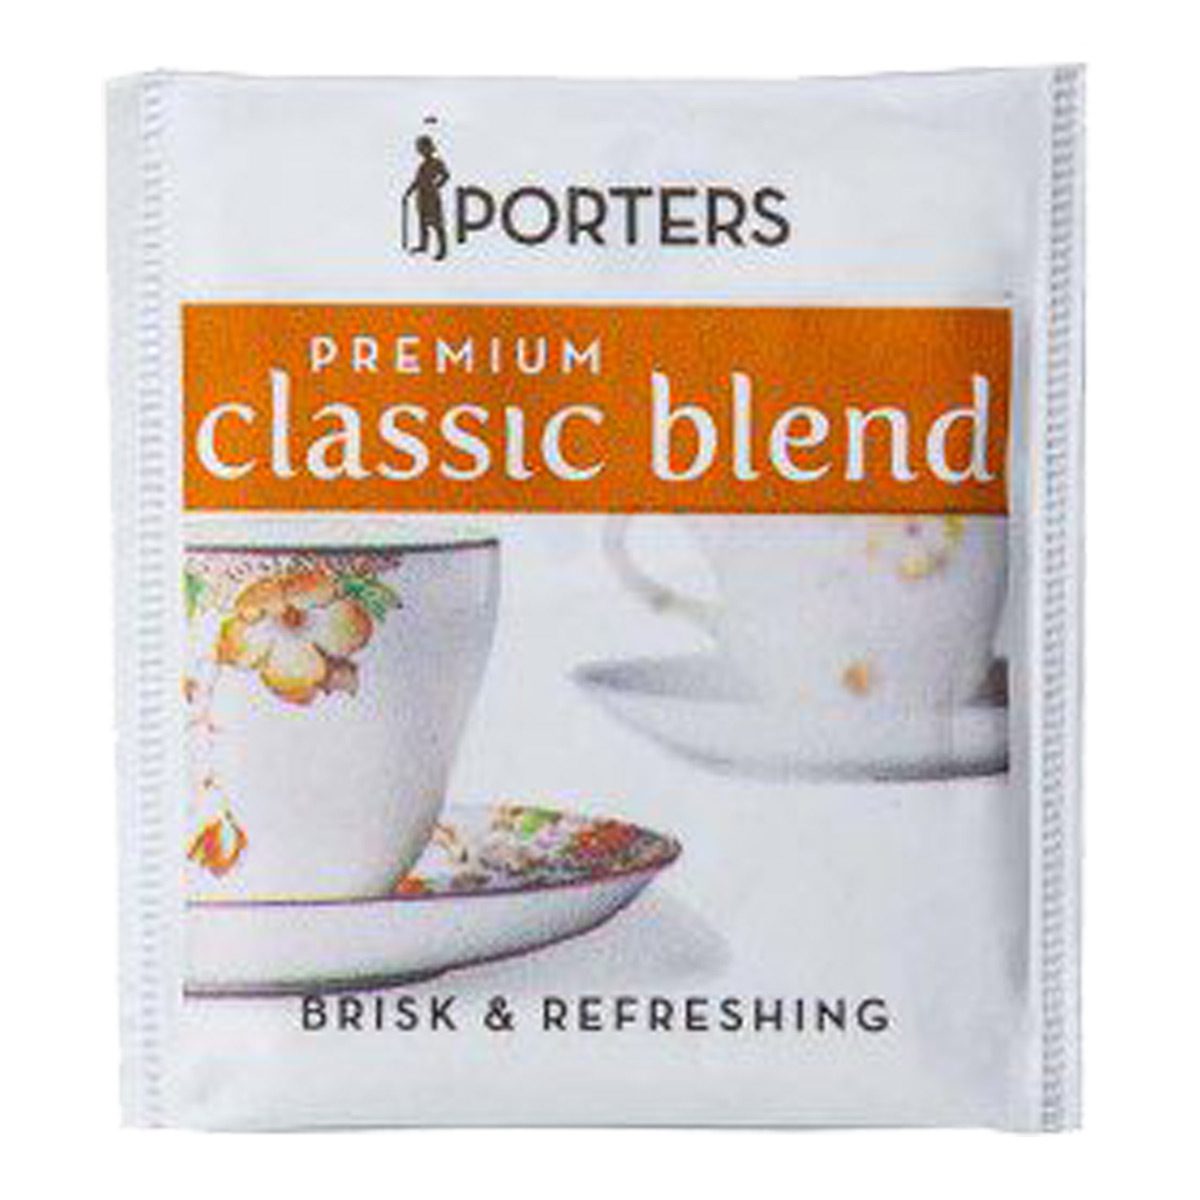 consumables-hospitality-beverage-food-porters-premium—blend-teabags-x100-bags-brisk-refreshing-drink-with-or-without-milk-blended-fine-black-tea-packaging-plastic-foil-free-vjs-distributors-HPTP